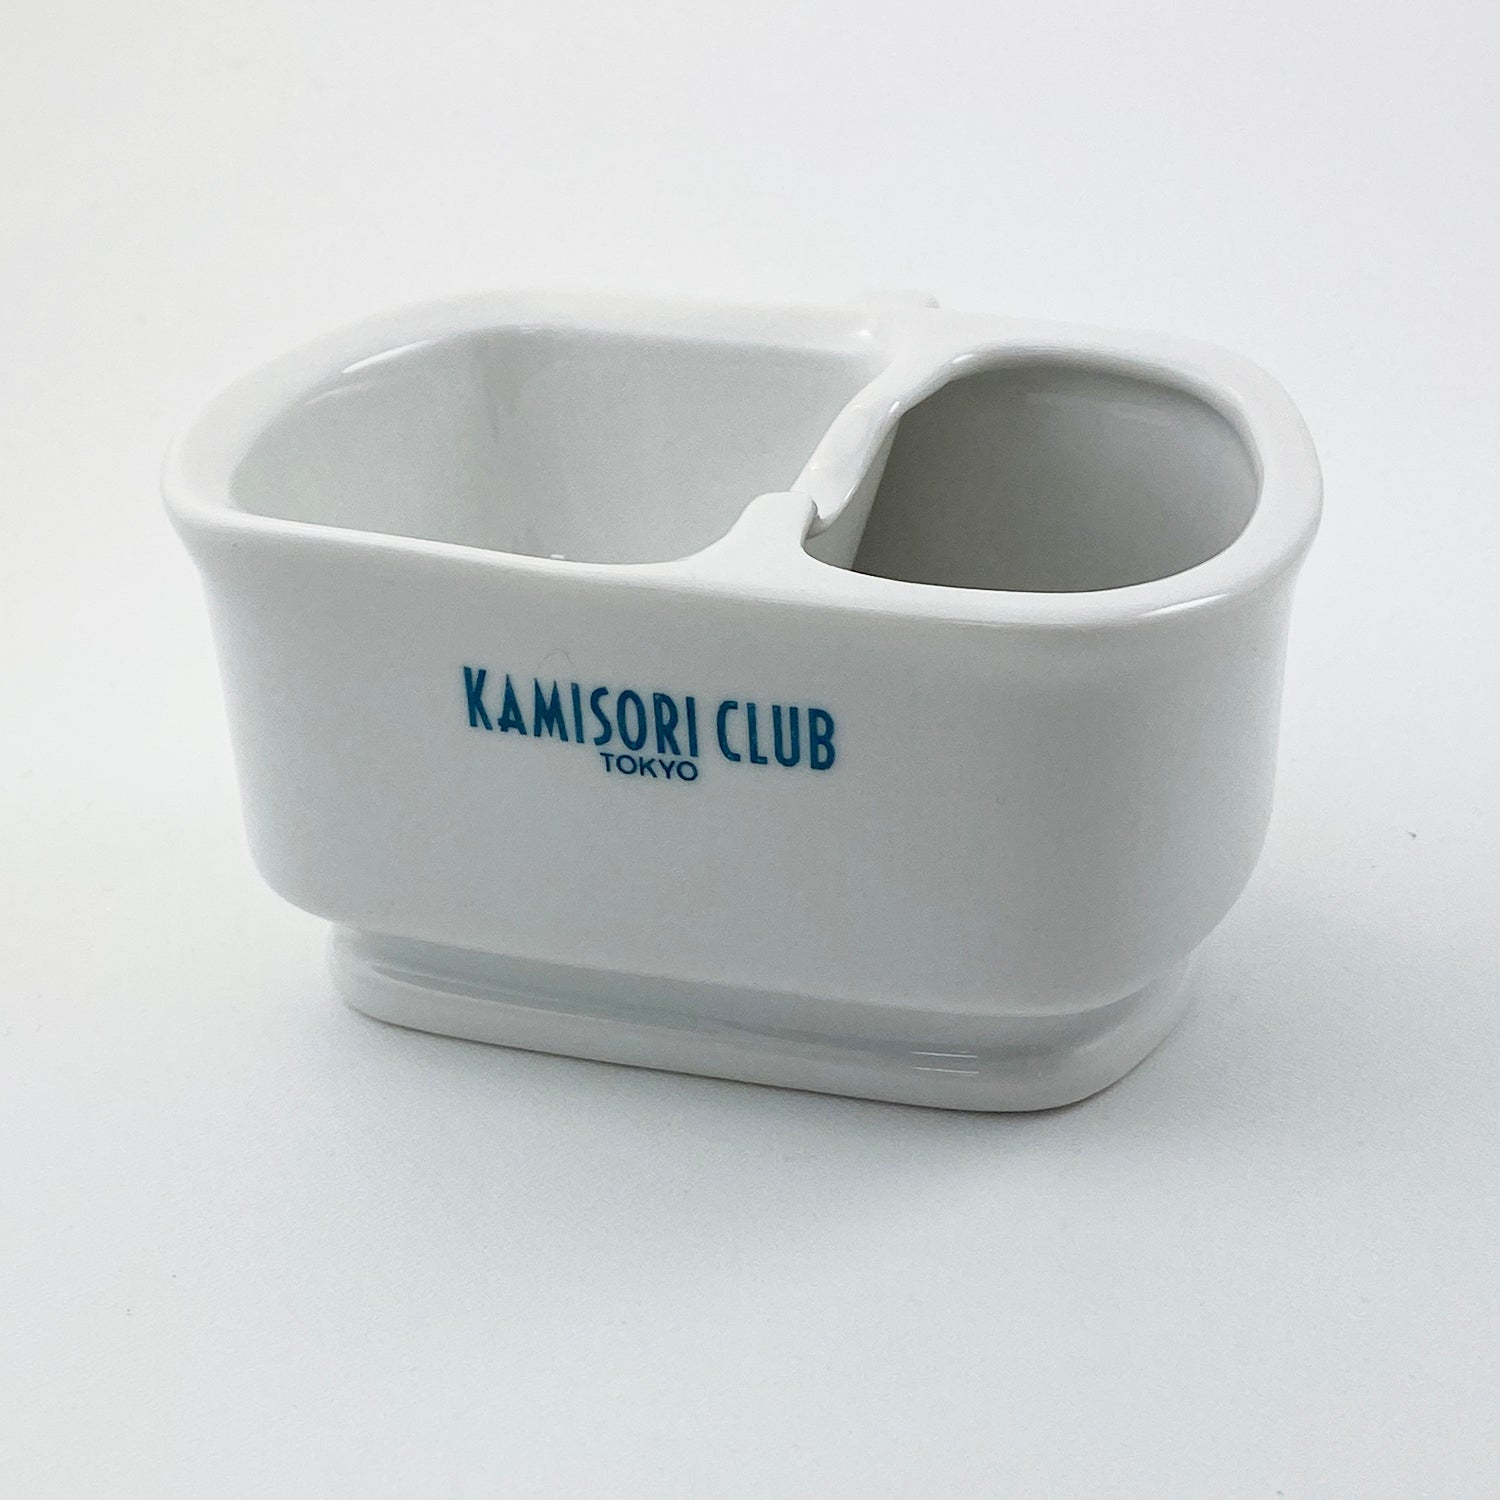 In fact, a mug found in a popular Japanese barber overseas. KAMISORICLUB ORIGINAL MUGCUP